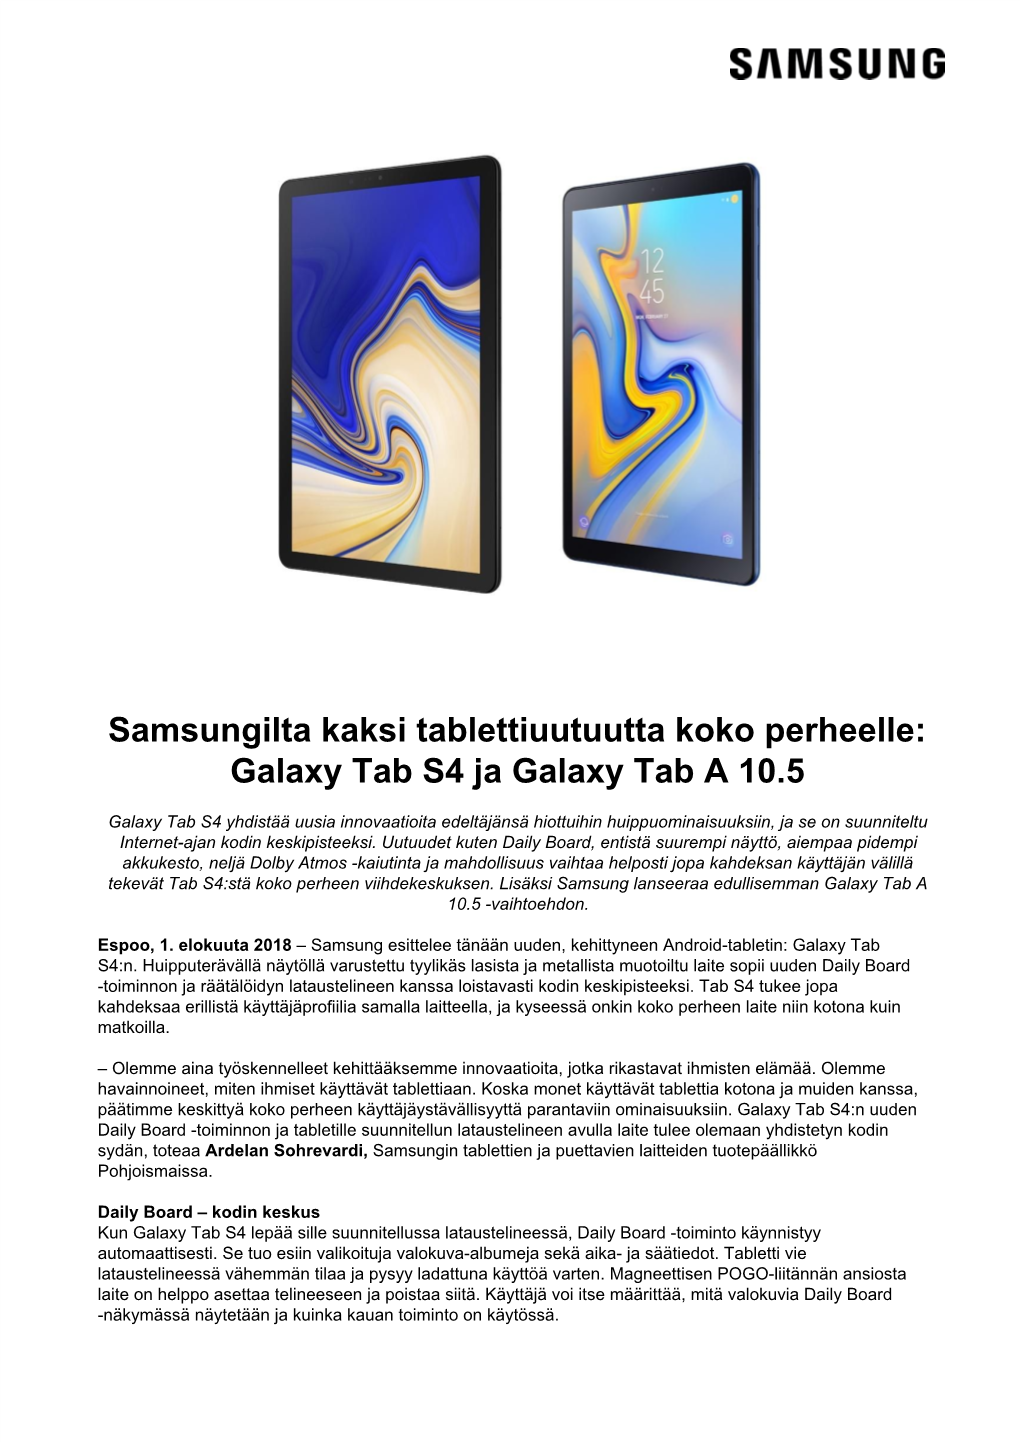 Galaxy Tab S4 Ja Galaxy Tab a 10.5